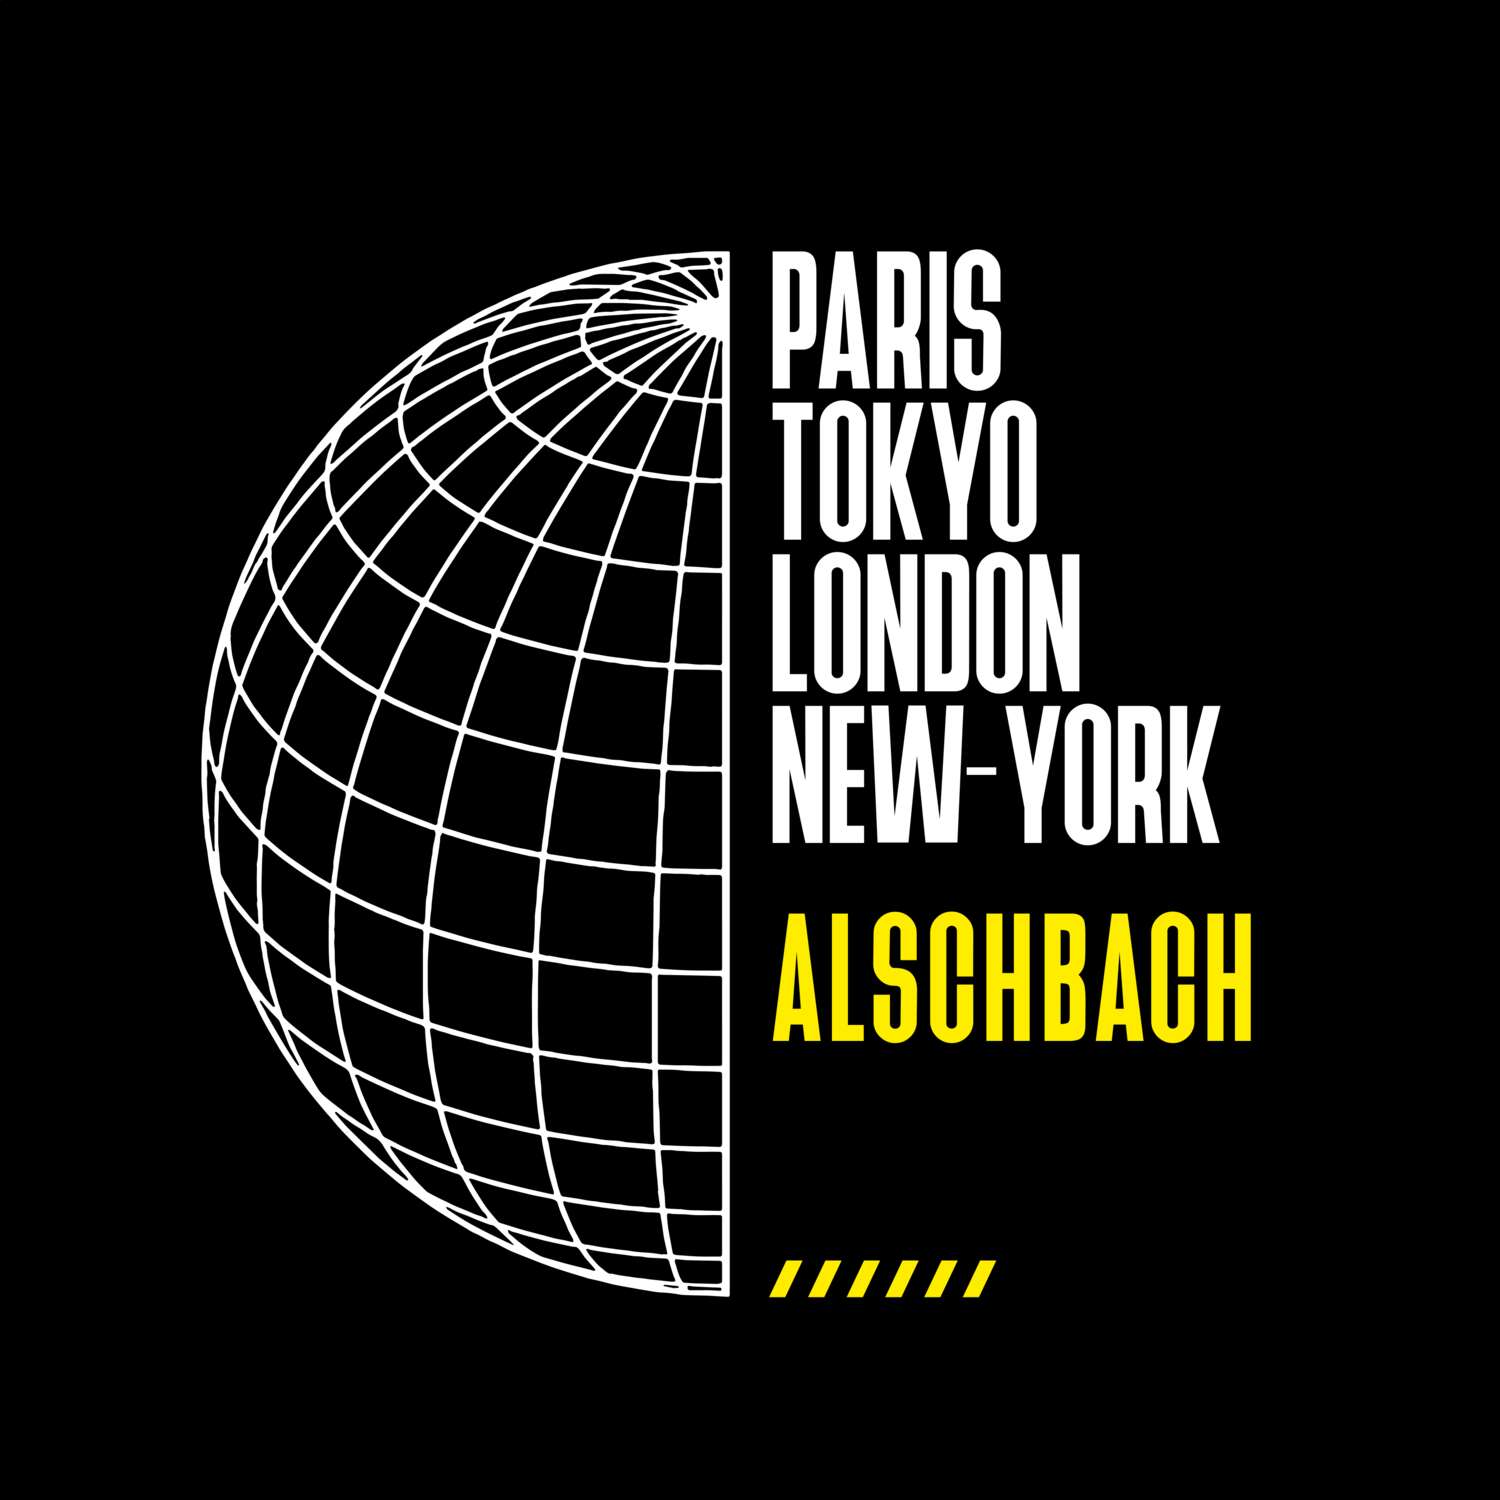 Alschbach T-Shirt »Paris Tokyo London«